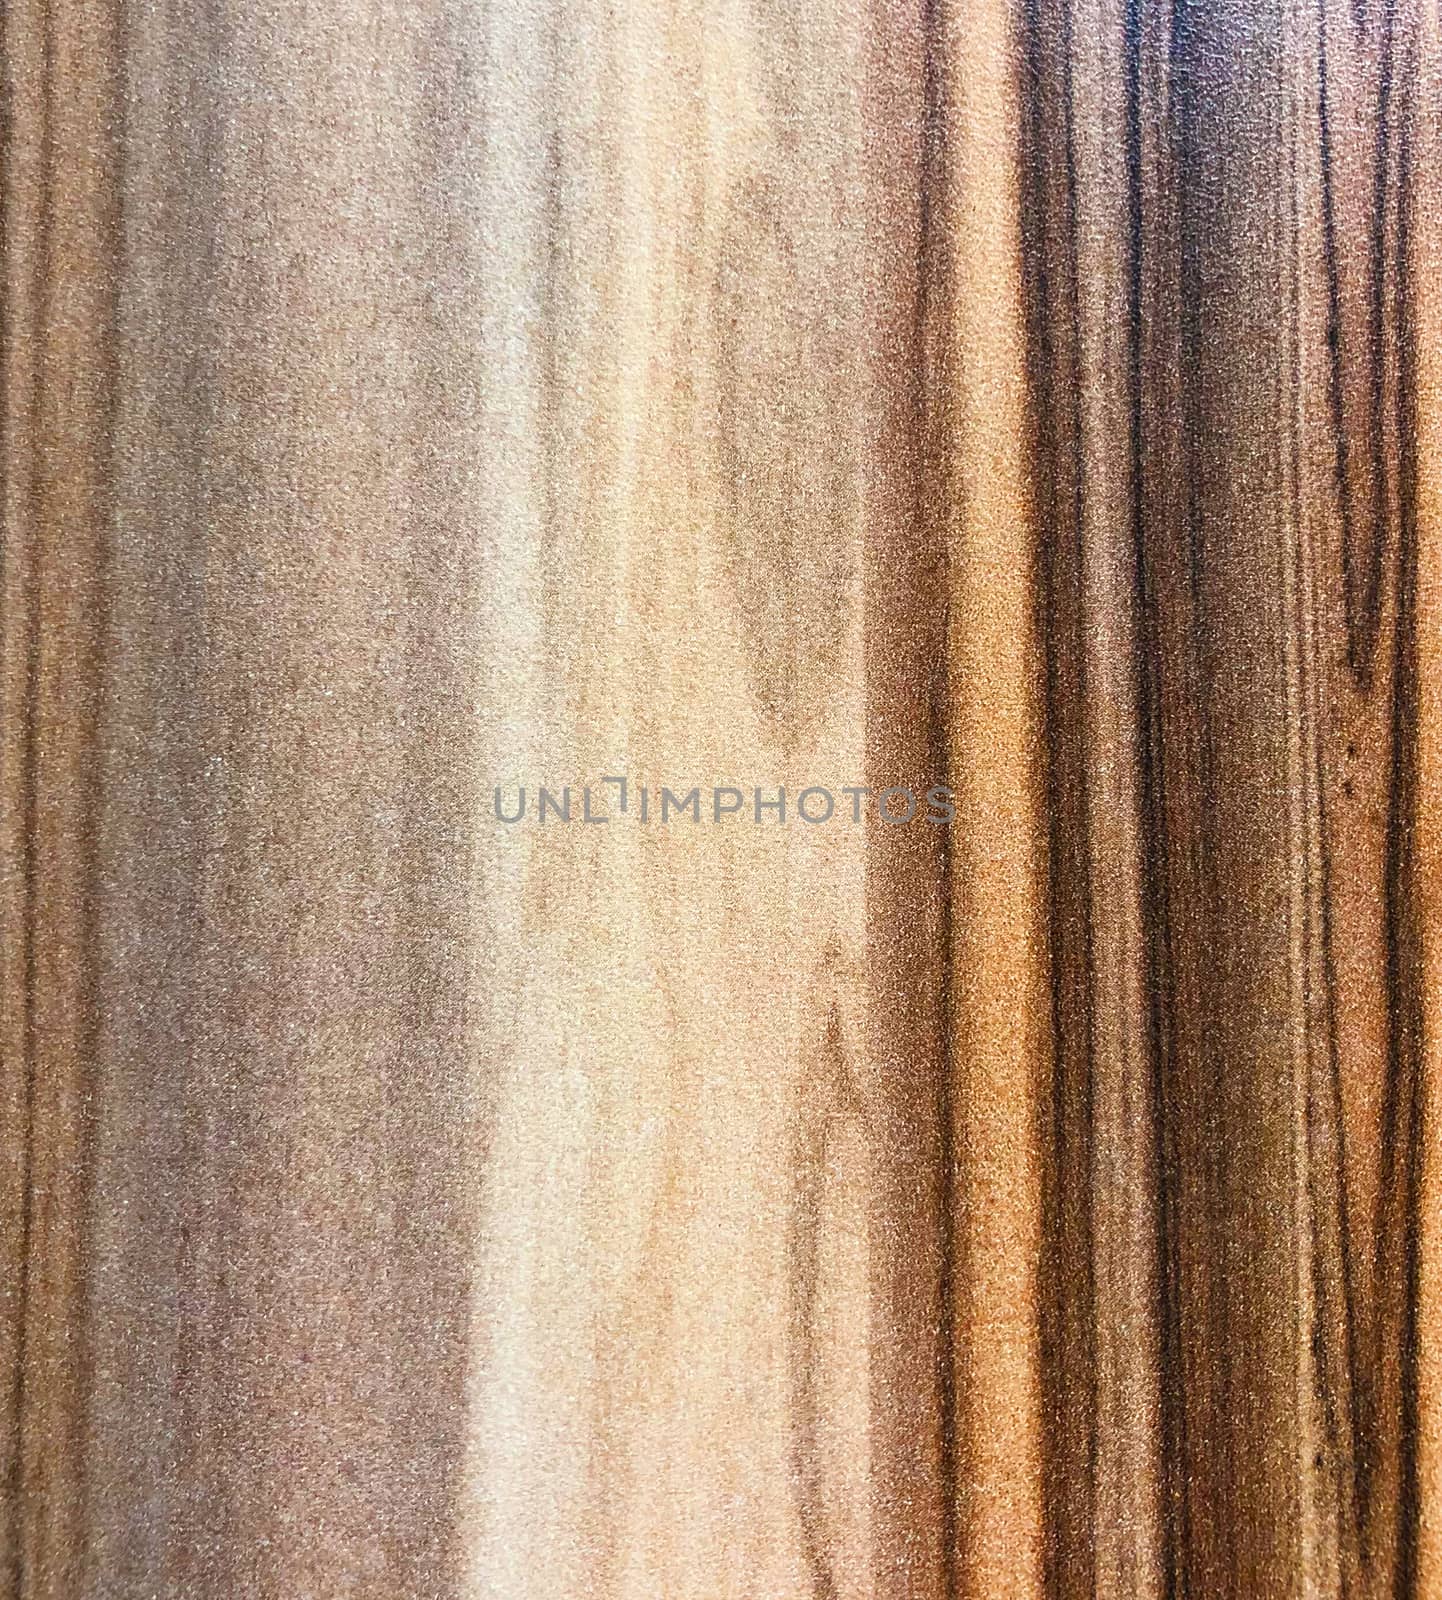 Texture wooden patern by F1b0nacci